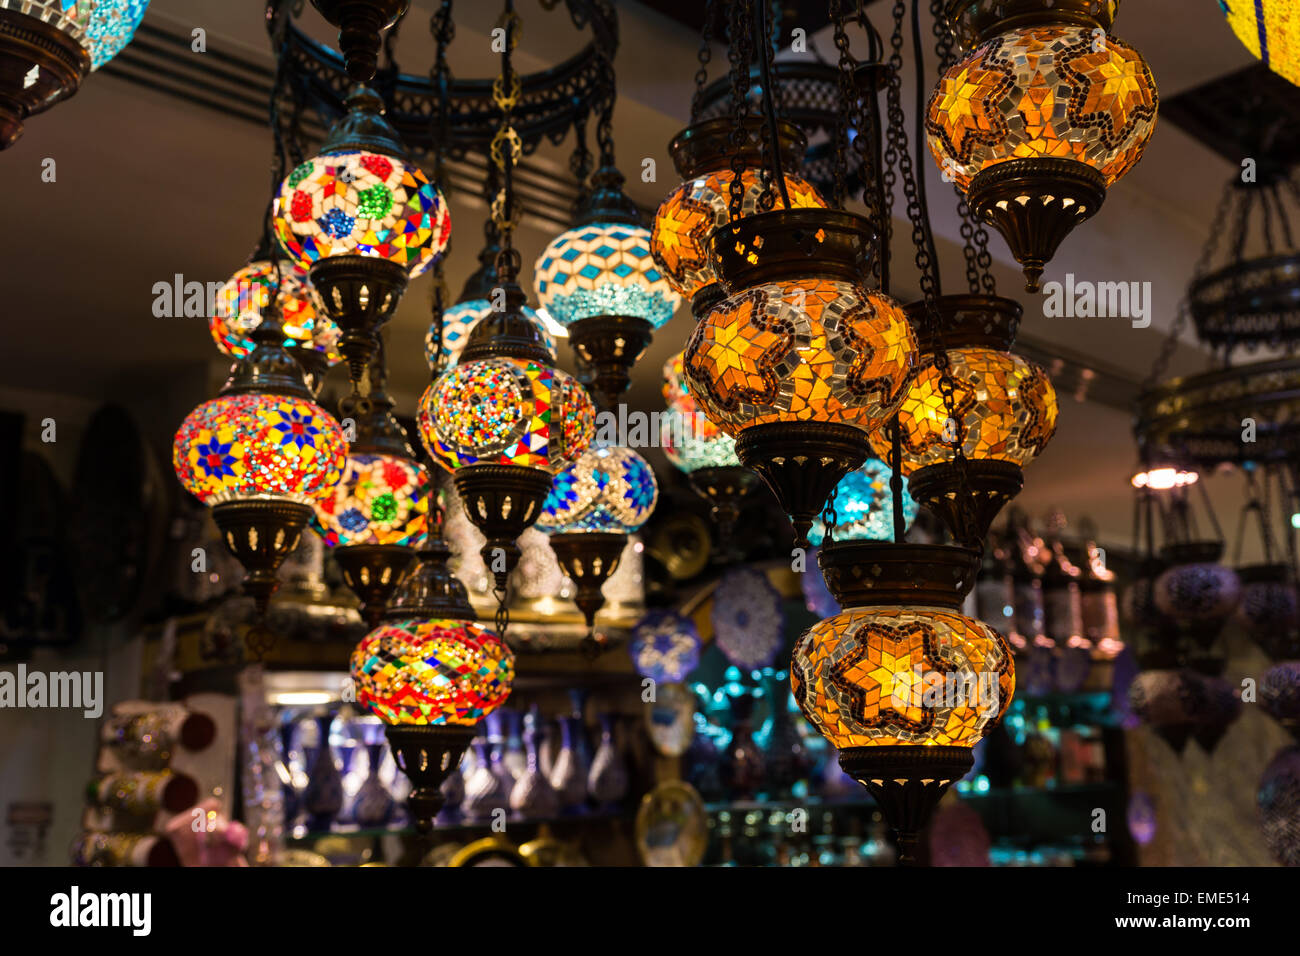 In a shopping gallery in Madinat Jumeriah in Dubai, UAE Stock Photo